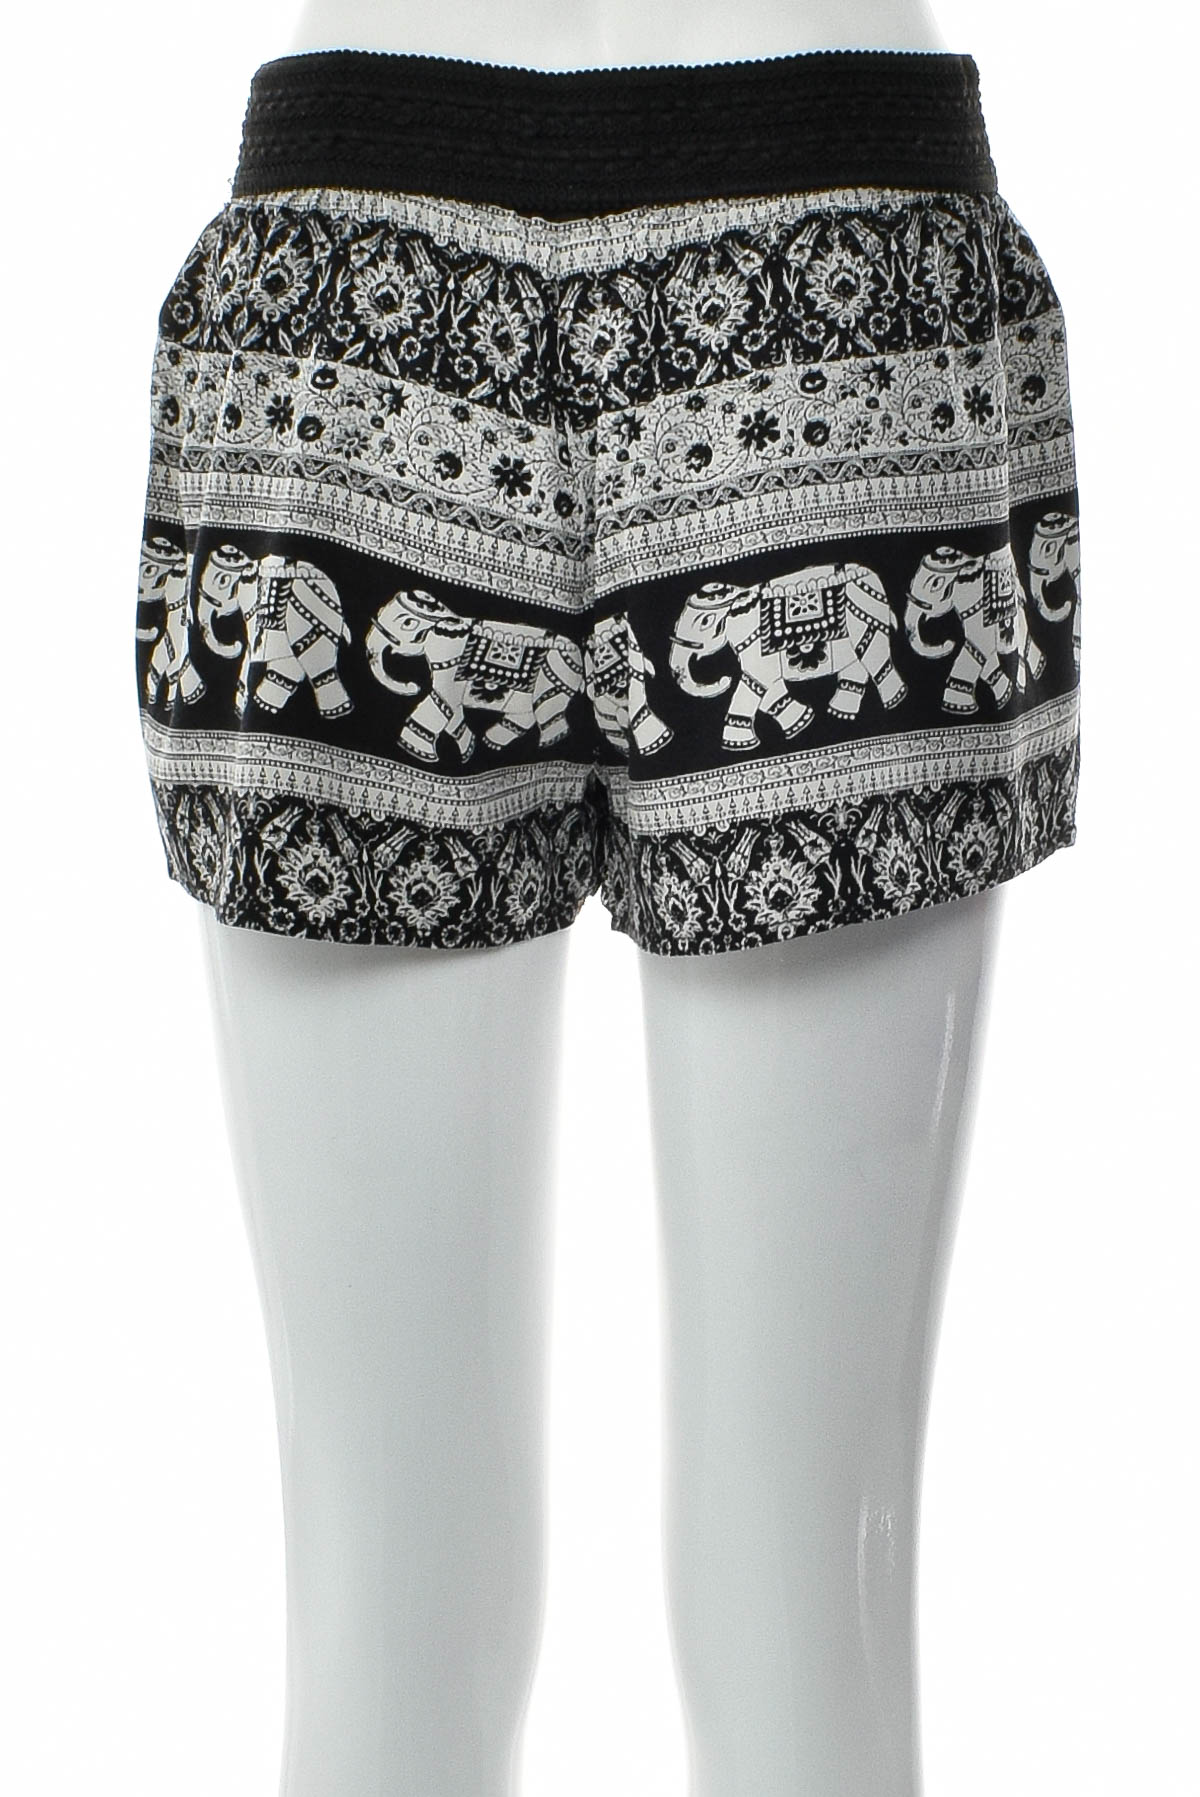 Female shorts - Tally Weijl - 1